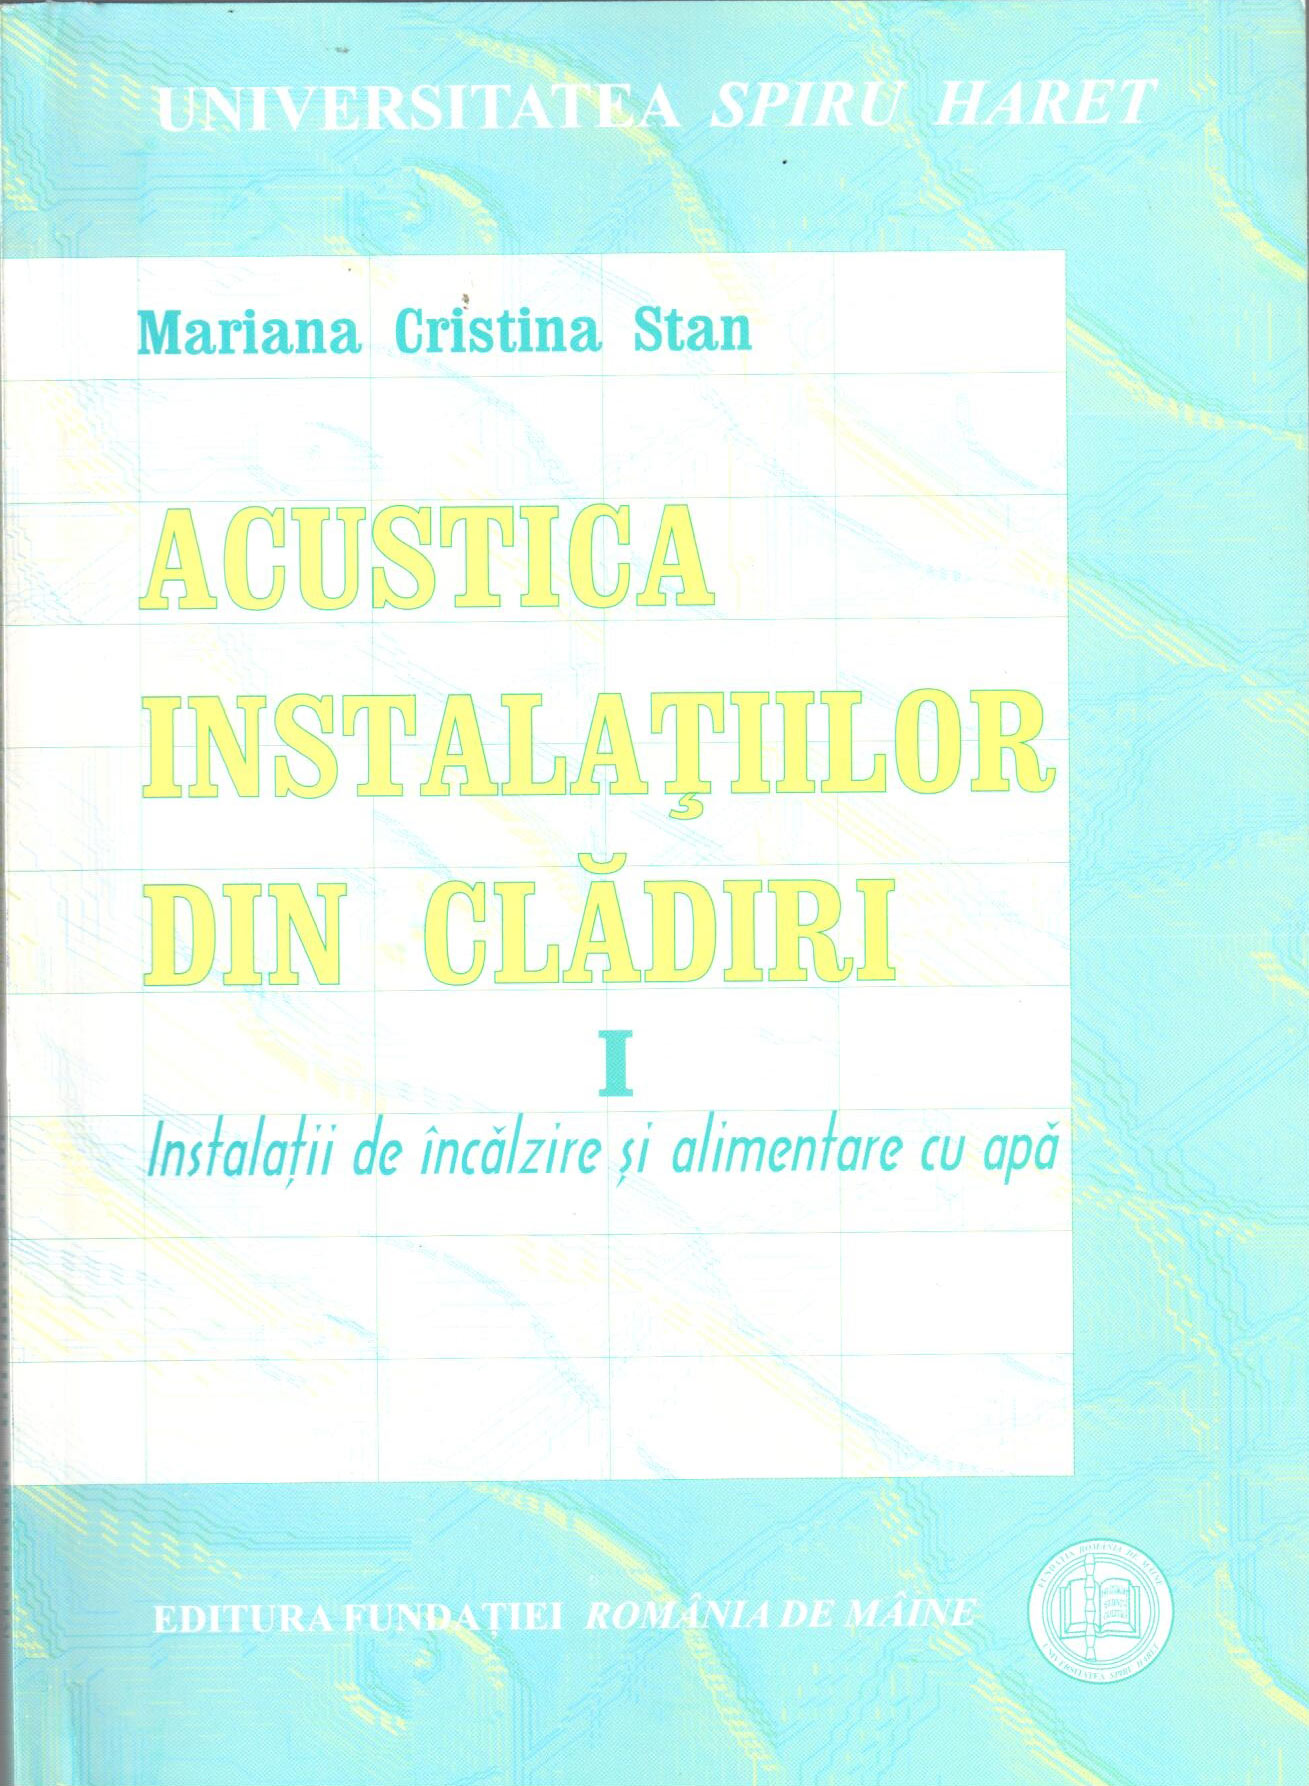 Acustica instalatiilor din cladiri | Mariana Cristina Stan